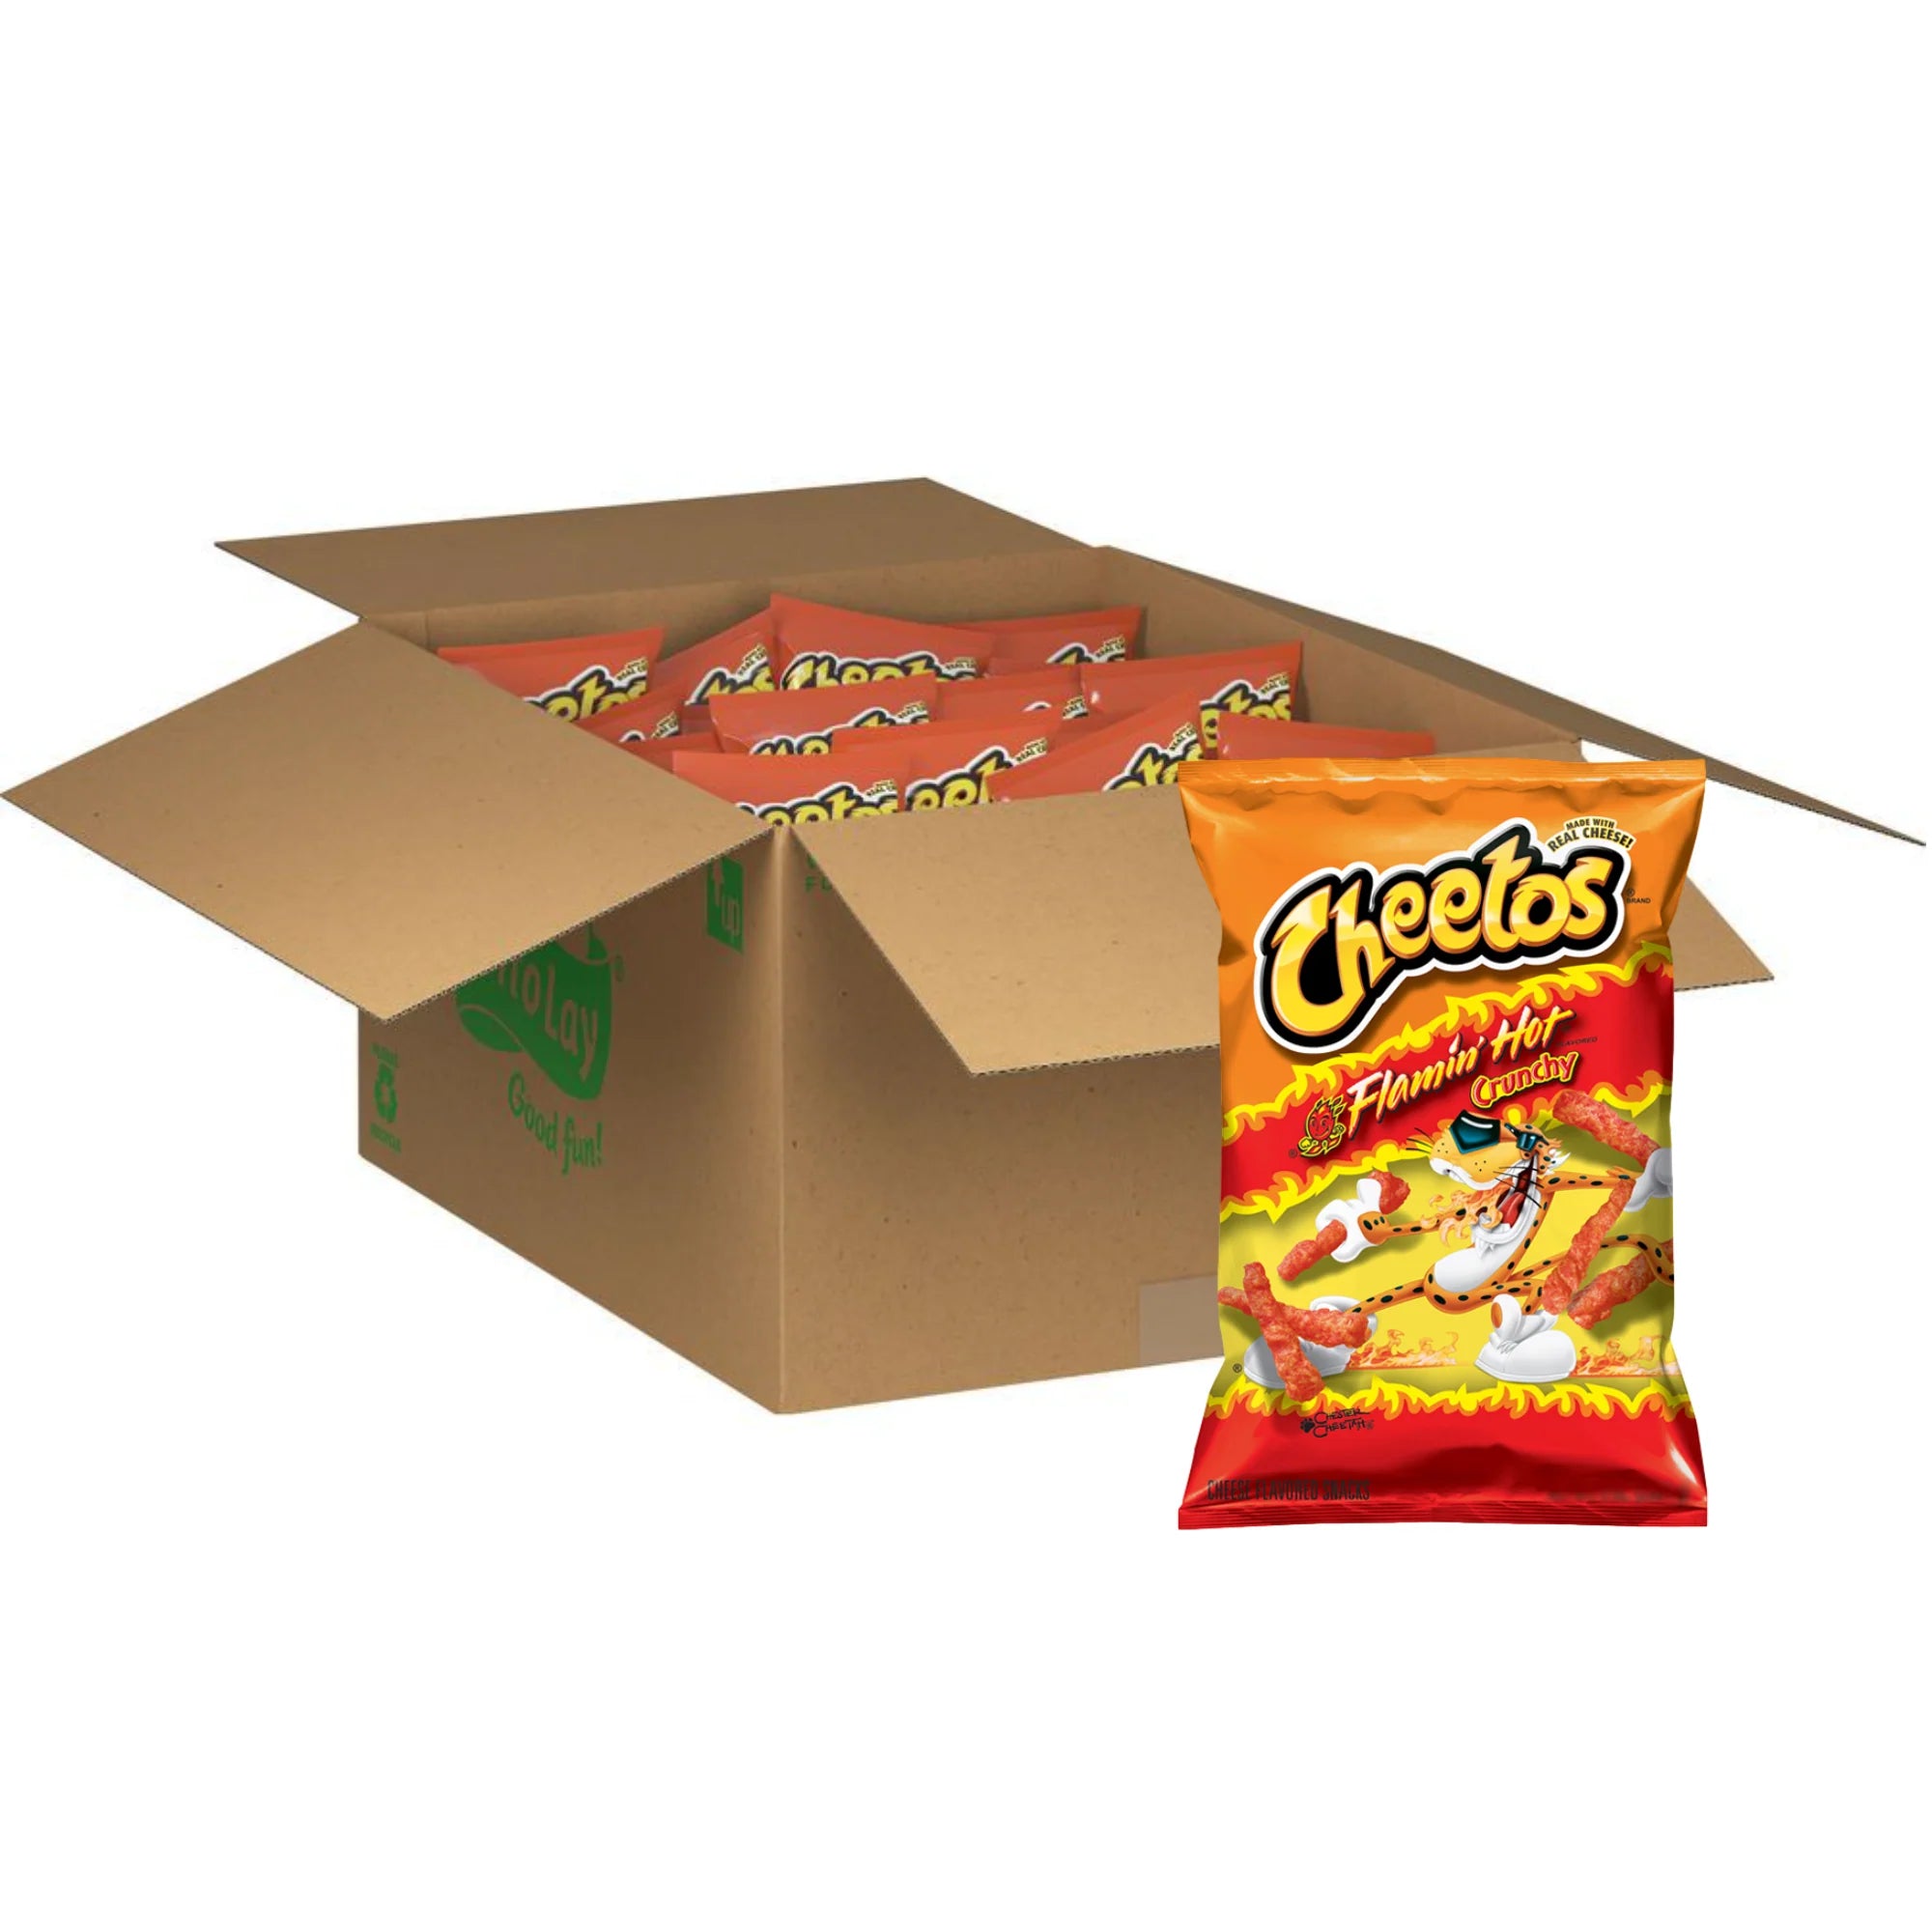 Cheetos Crunchy Flamin' Hot Box of 10 (10 x 226g)